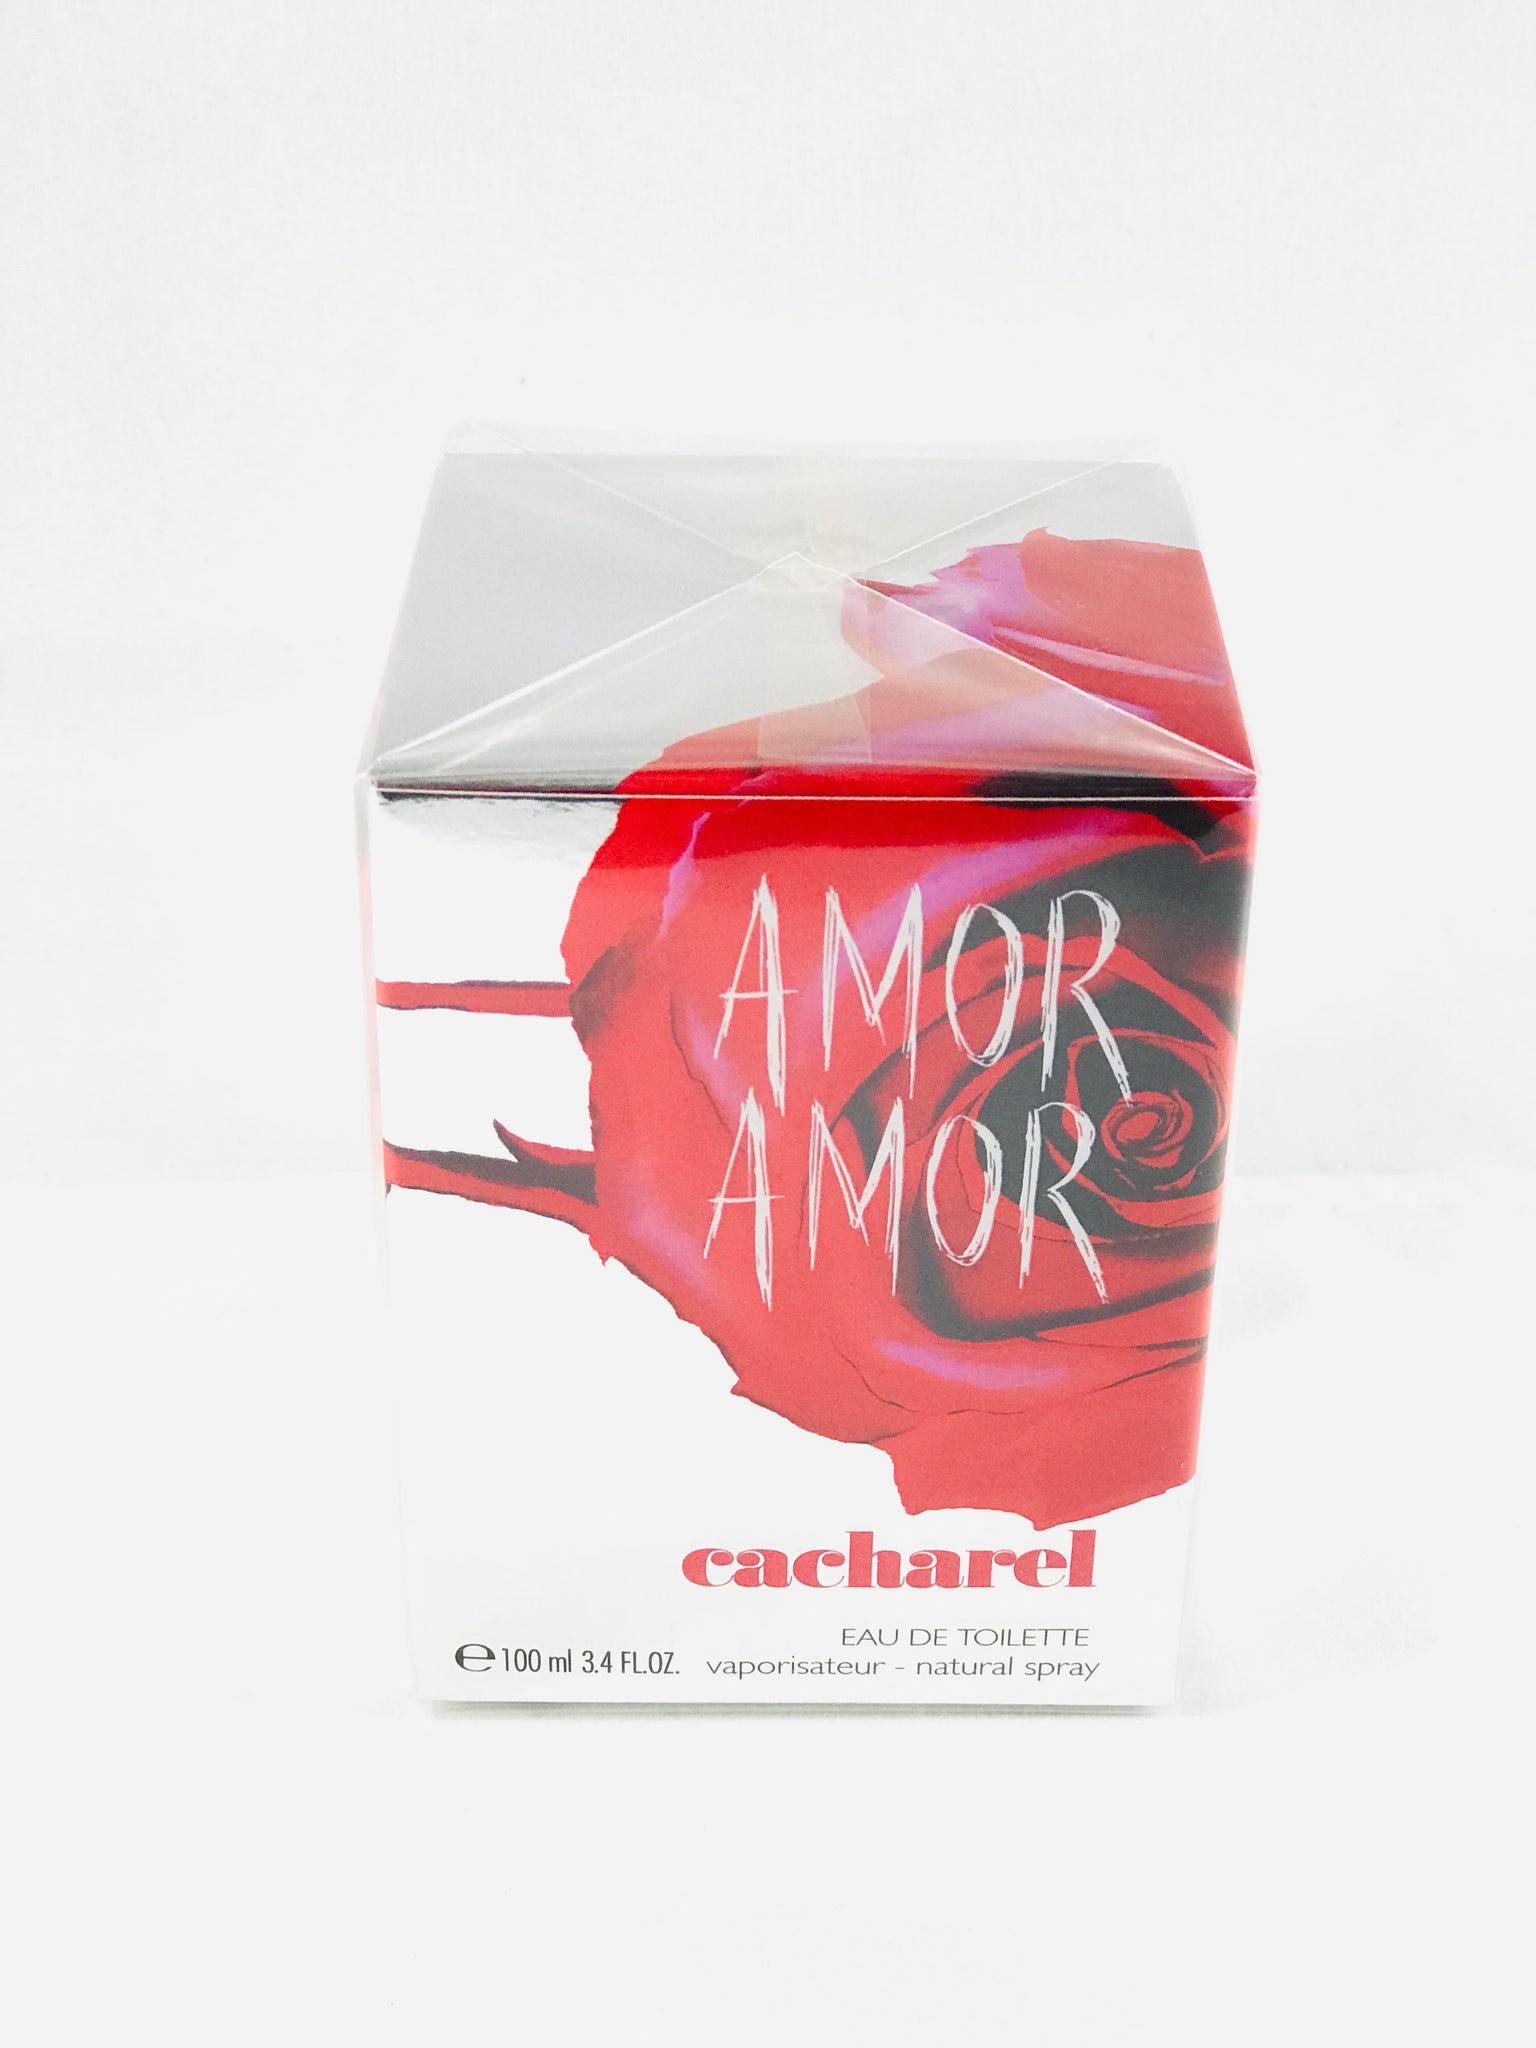 Perfume Para Dama Amor Amor In Flash De Cacharel 100 Ml Eau De Toilette -  Tiendas JR